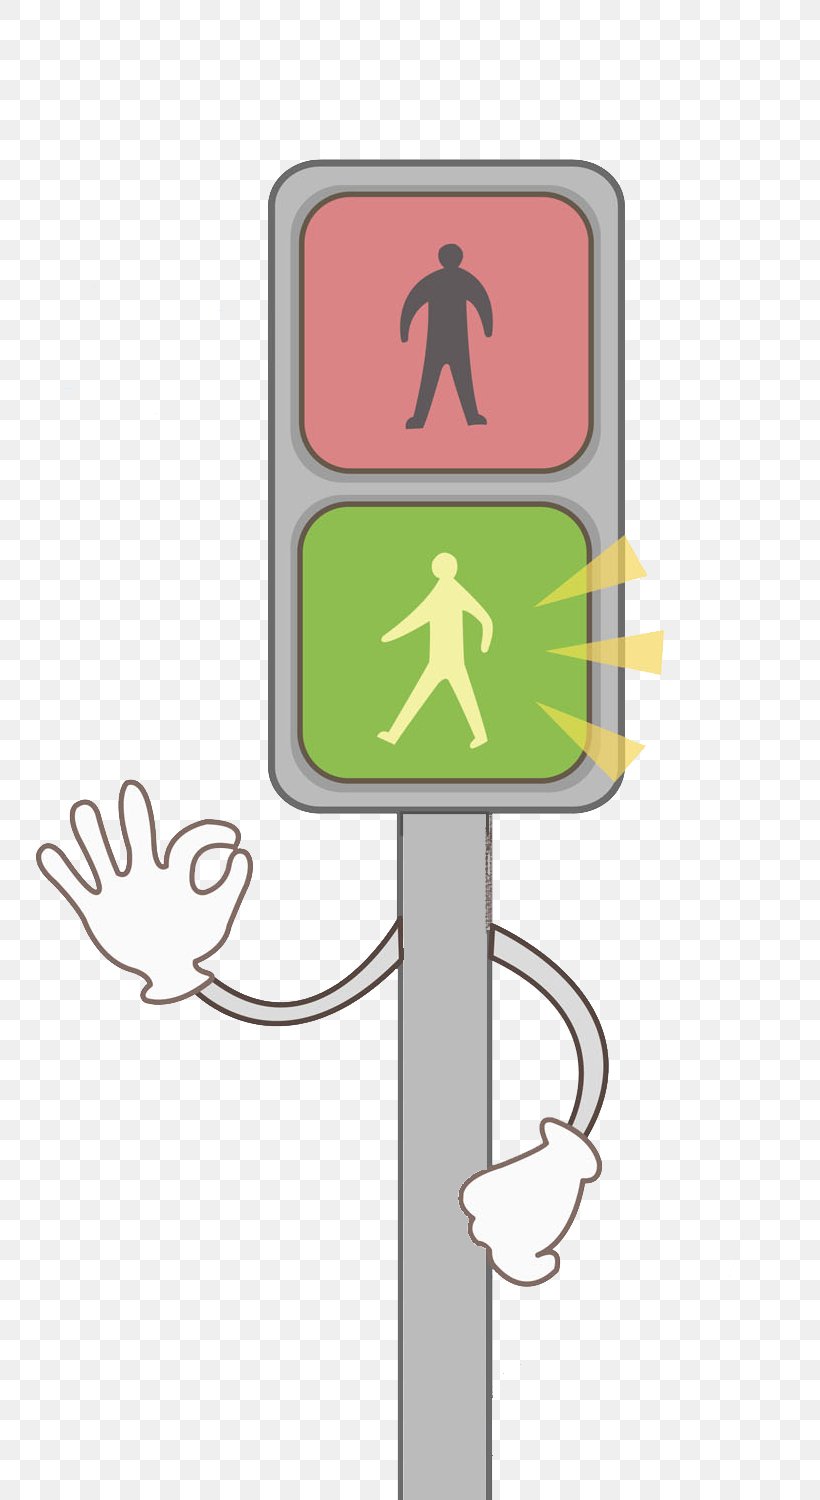 Green Cartoon Traffic Light Illustration, PNG, 800x1500px, Green, Cartoon, Railway Signal, Road, Sign Download Free